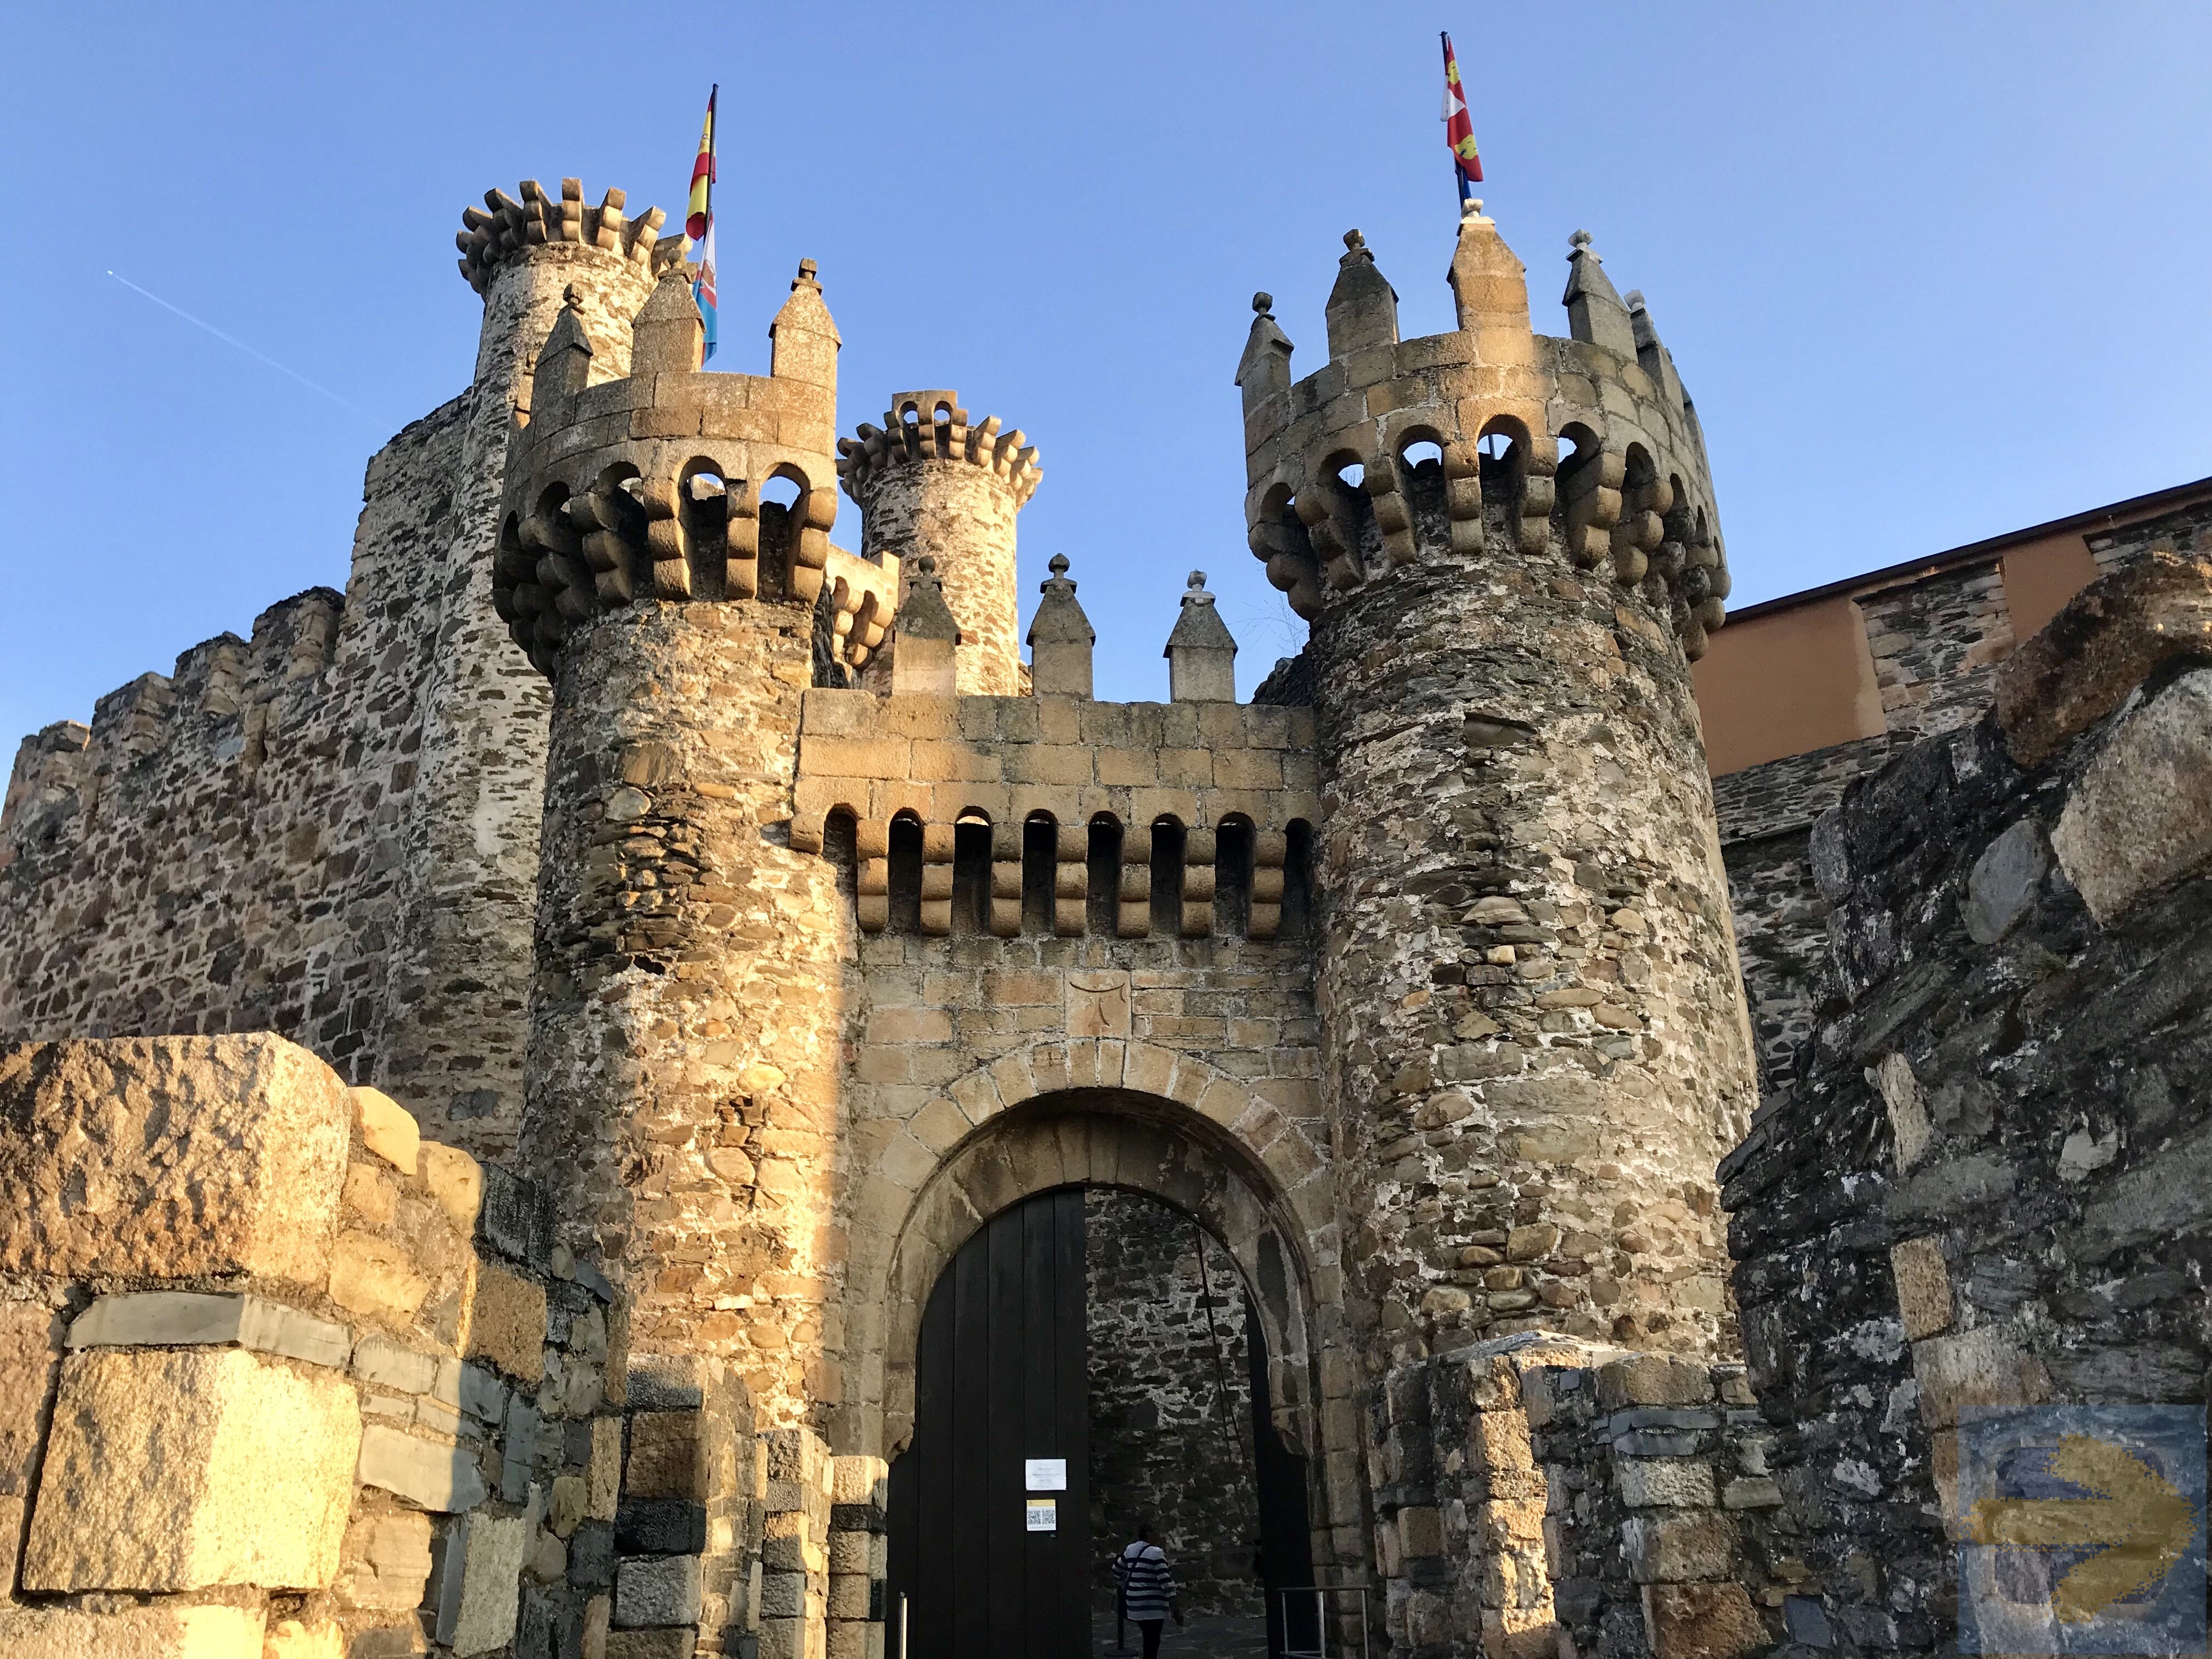 The Templar Castle at Ponferrada